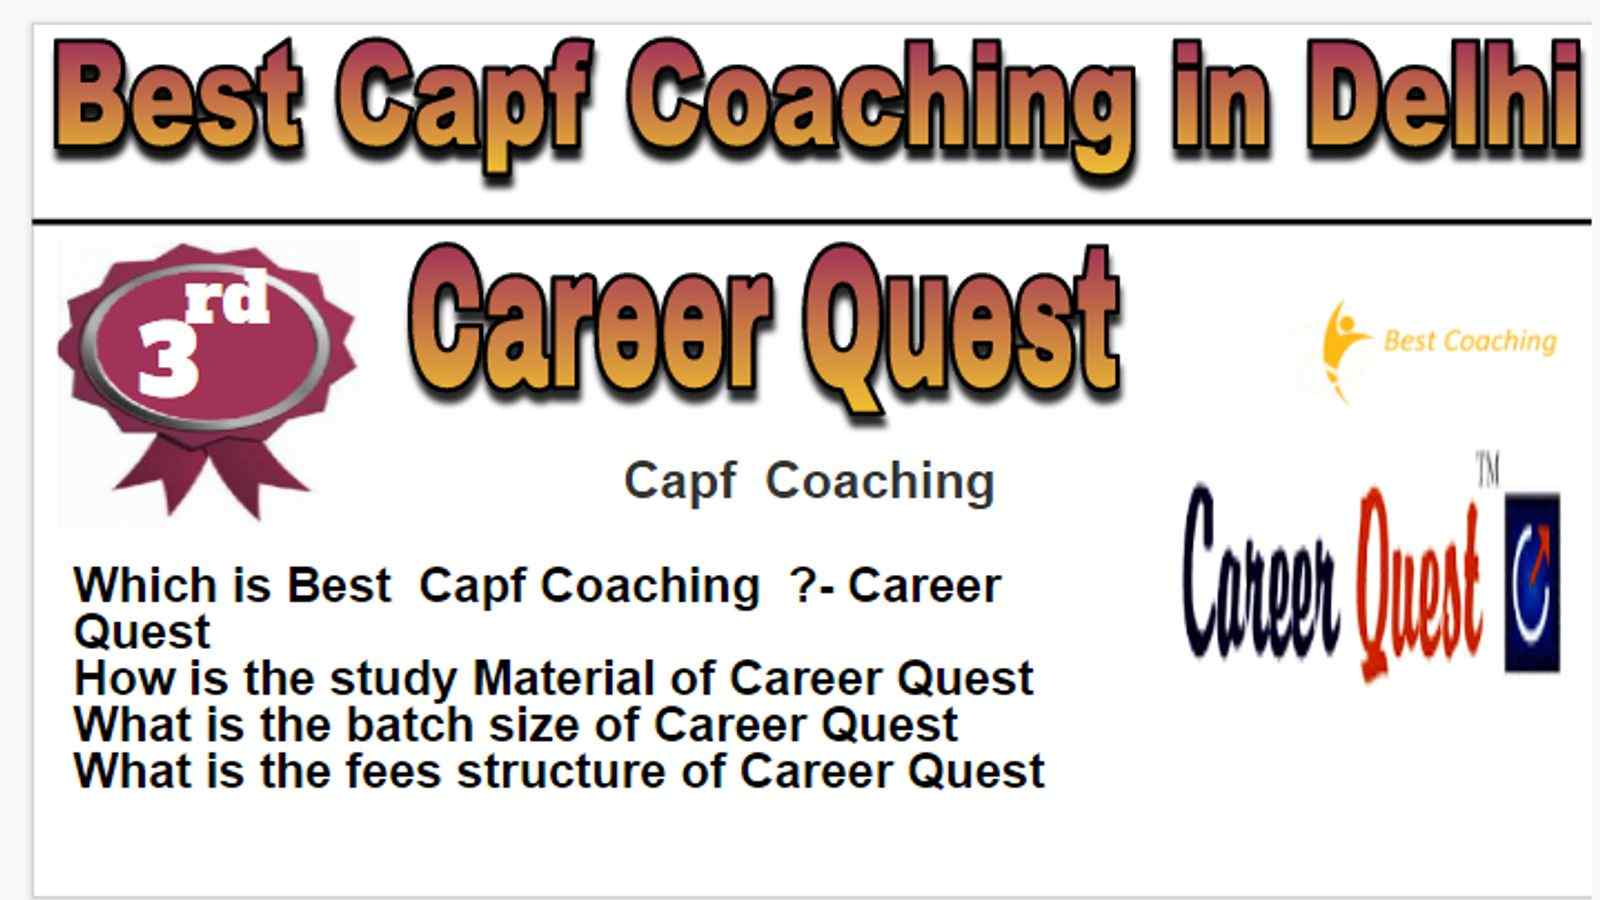 Rank-3 Best Capf Coaching in Delhi